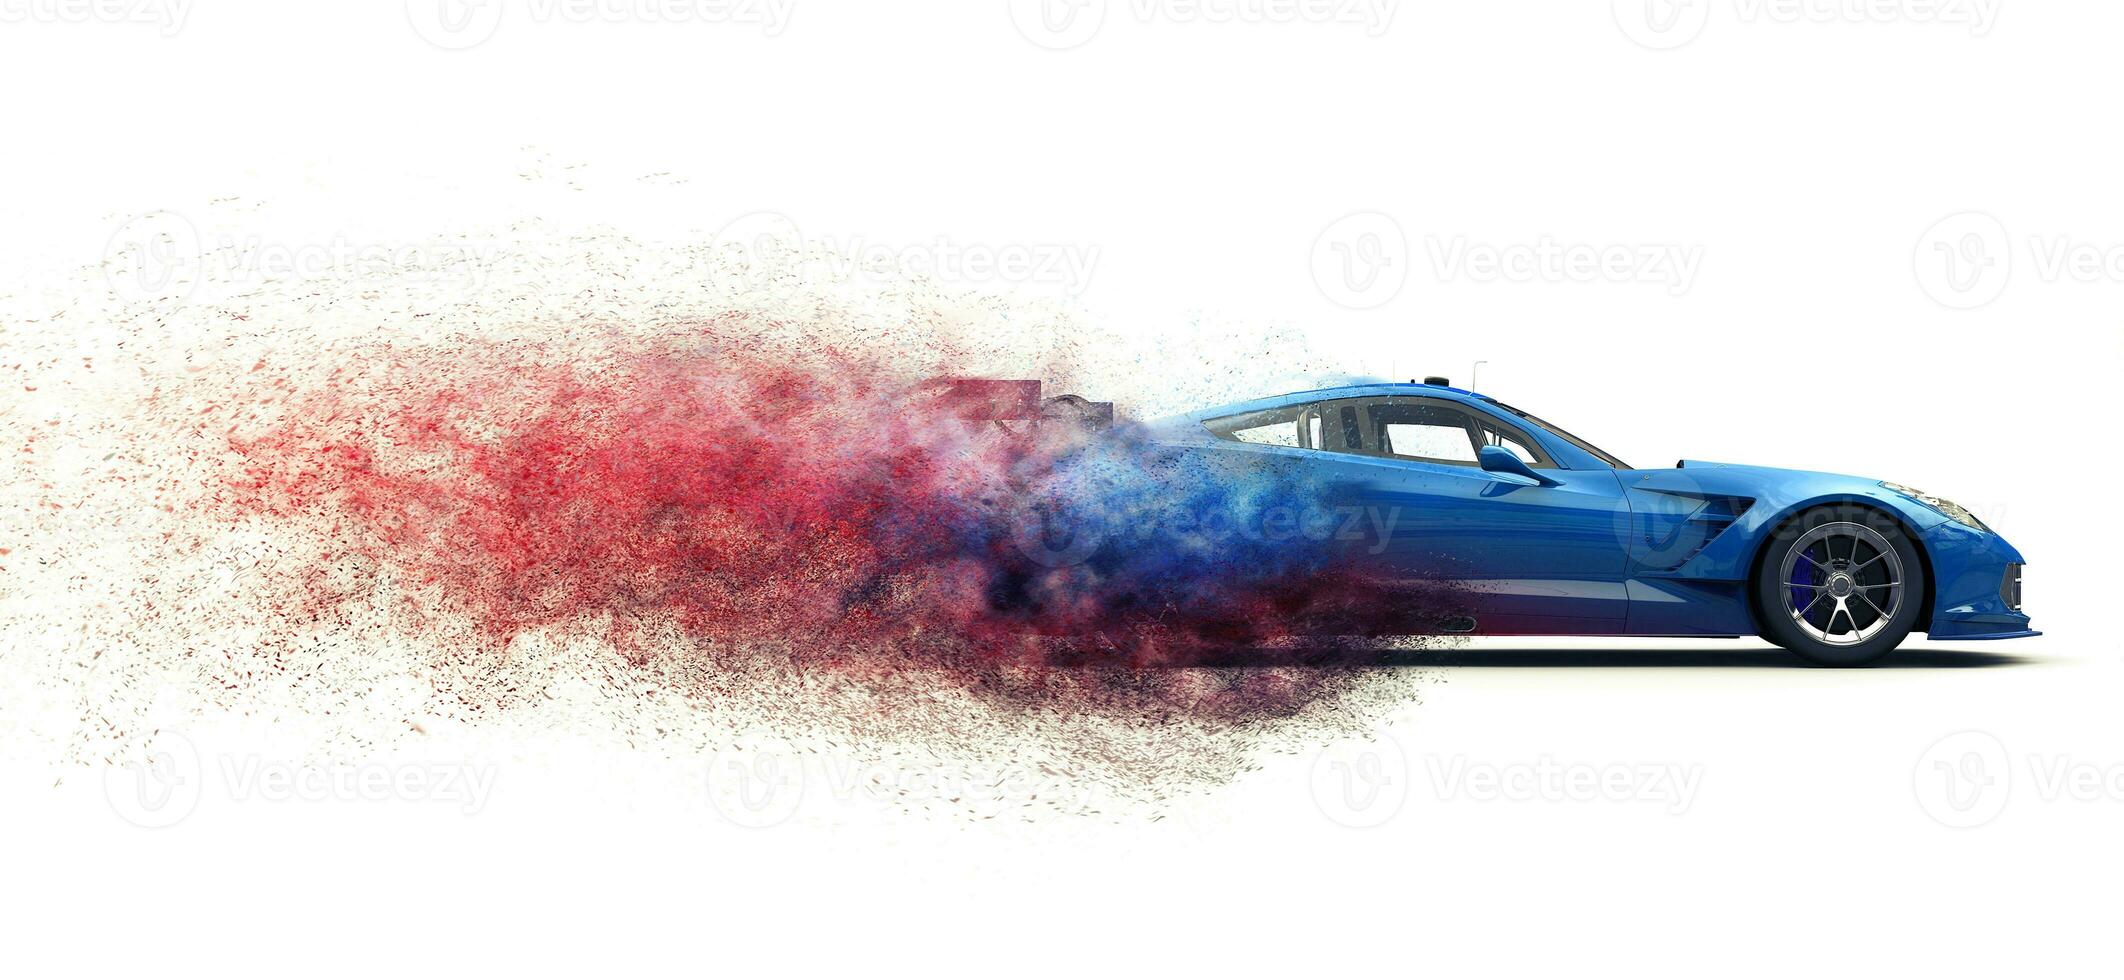 extrem modern blå super bil - partikel upplösning effekt foto